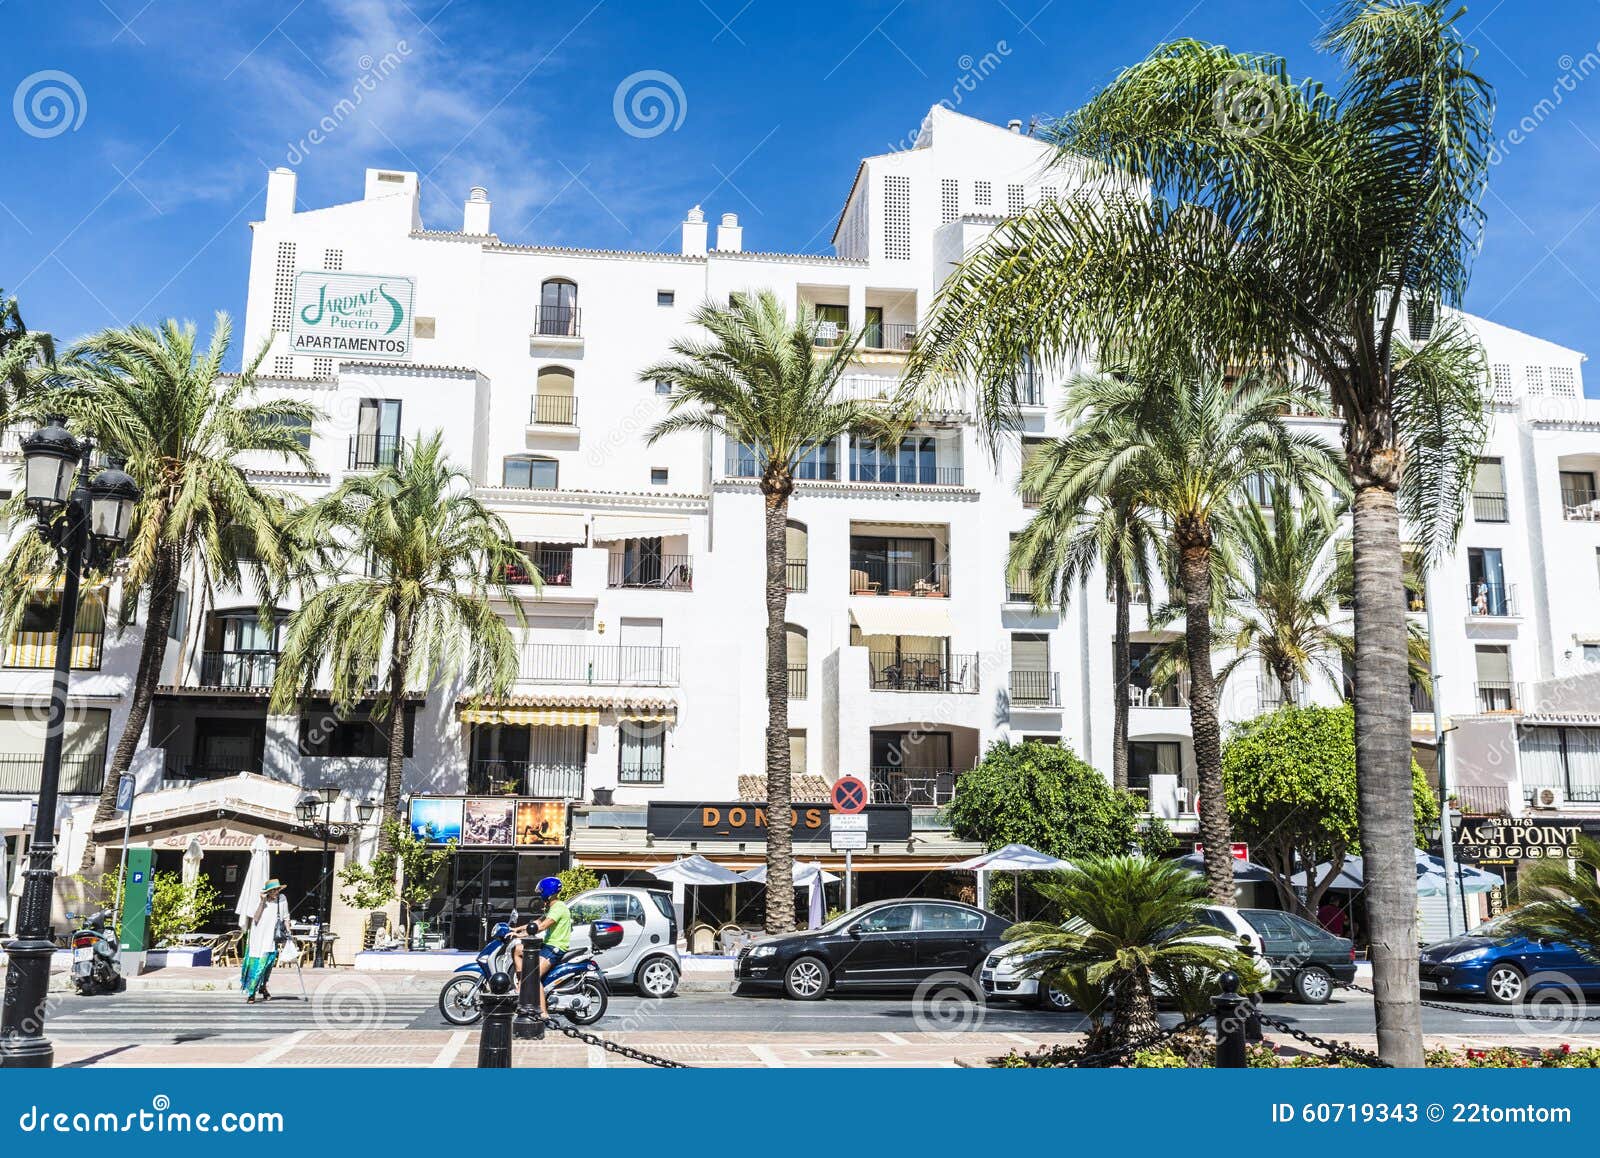 Puerto Banus, Spain - August 15, 2015: Shopping Center In Puerto